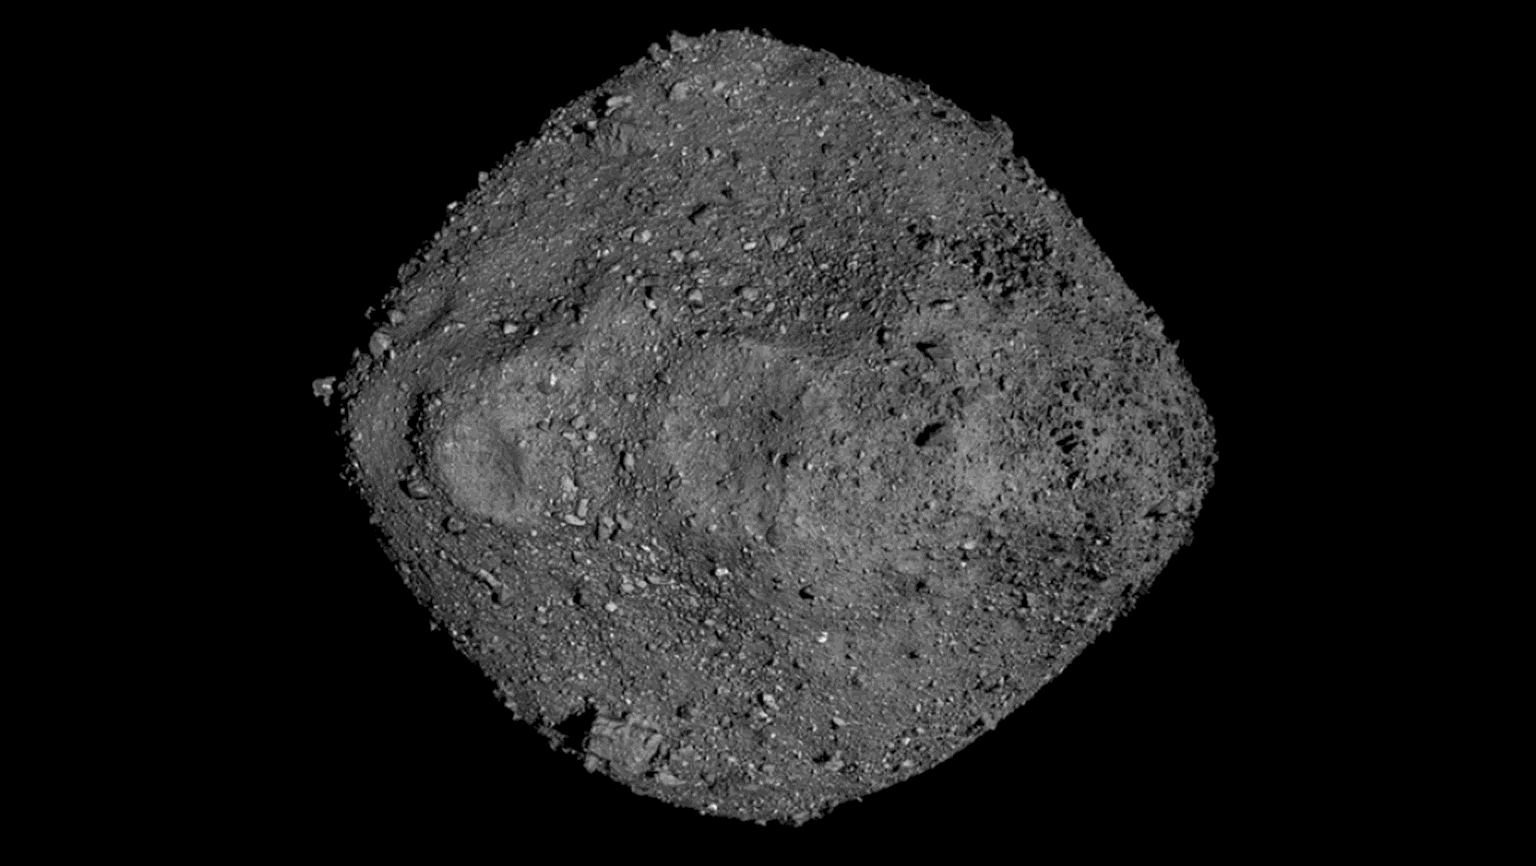 Asteroid Bennu
https://twitter.com/NASA/status/1706000829407244430/photo/1